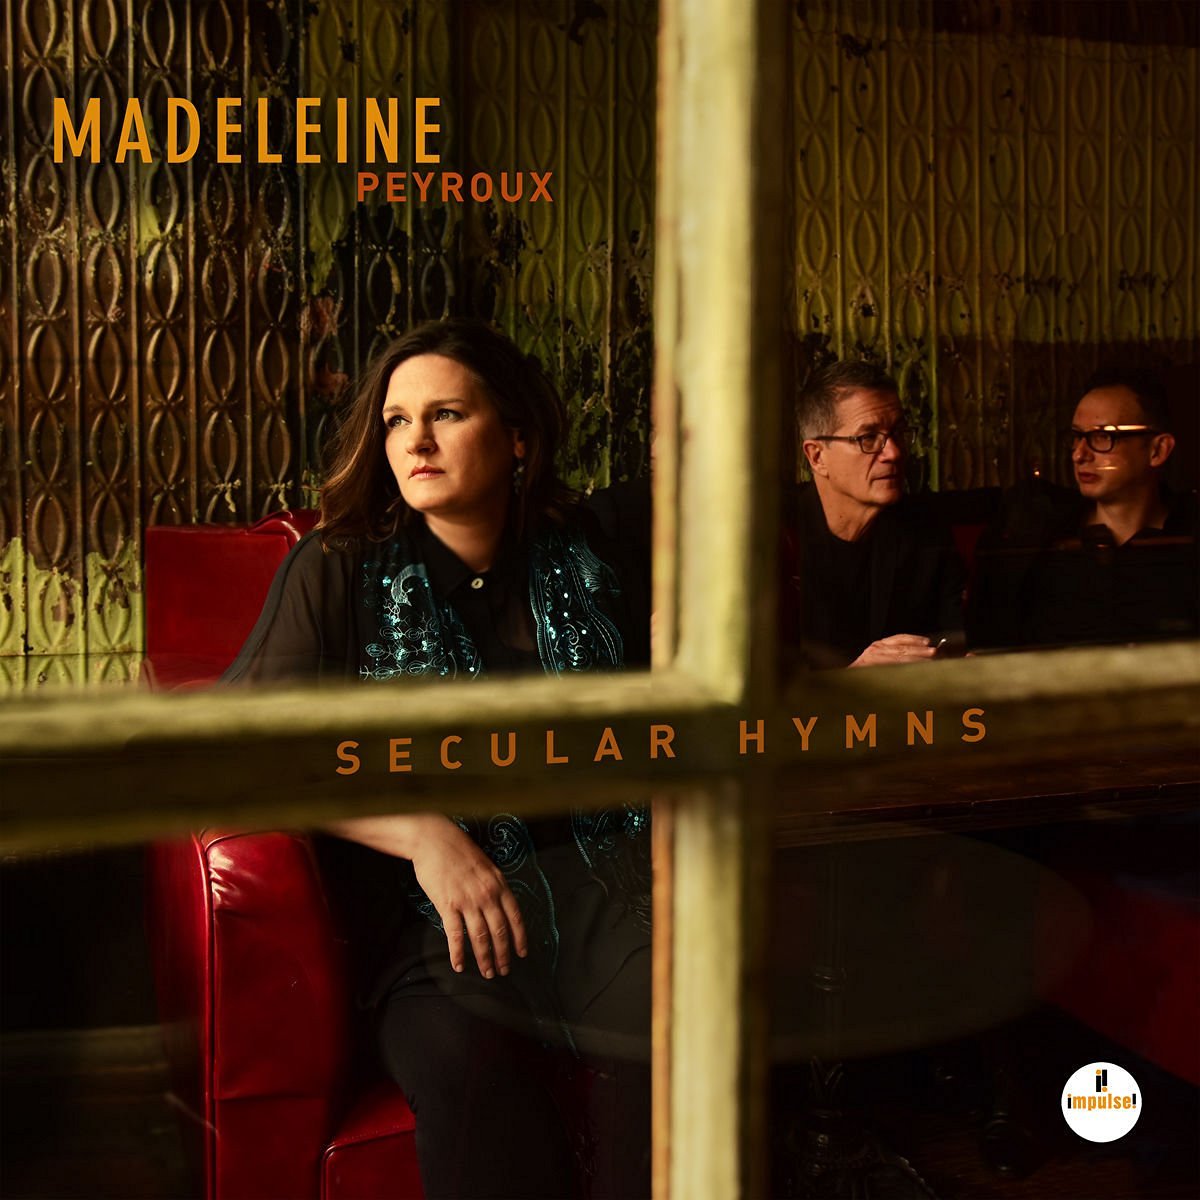 Madeleine Peyroux – Secular Hymns (2016) [HDTracks FLAC 24bit/96kHz]